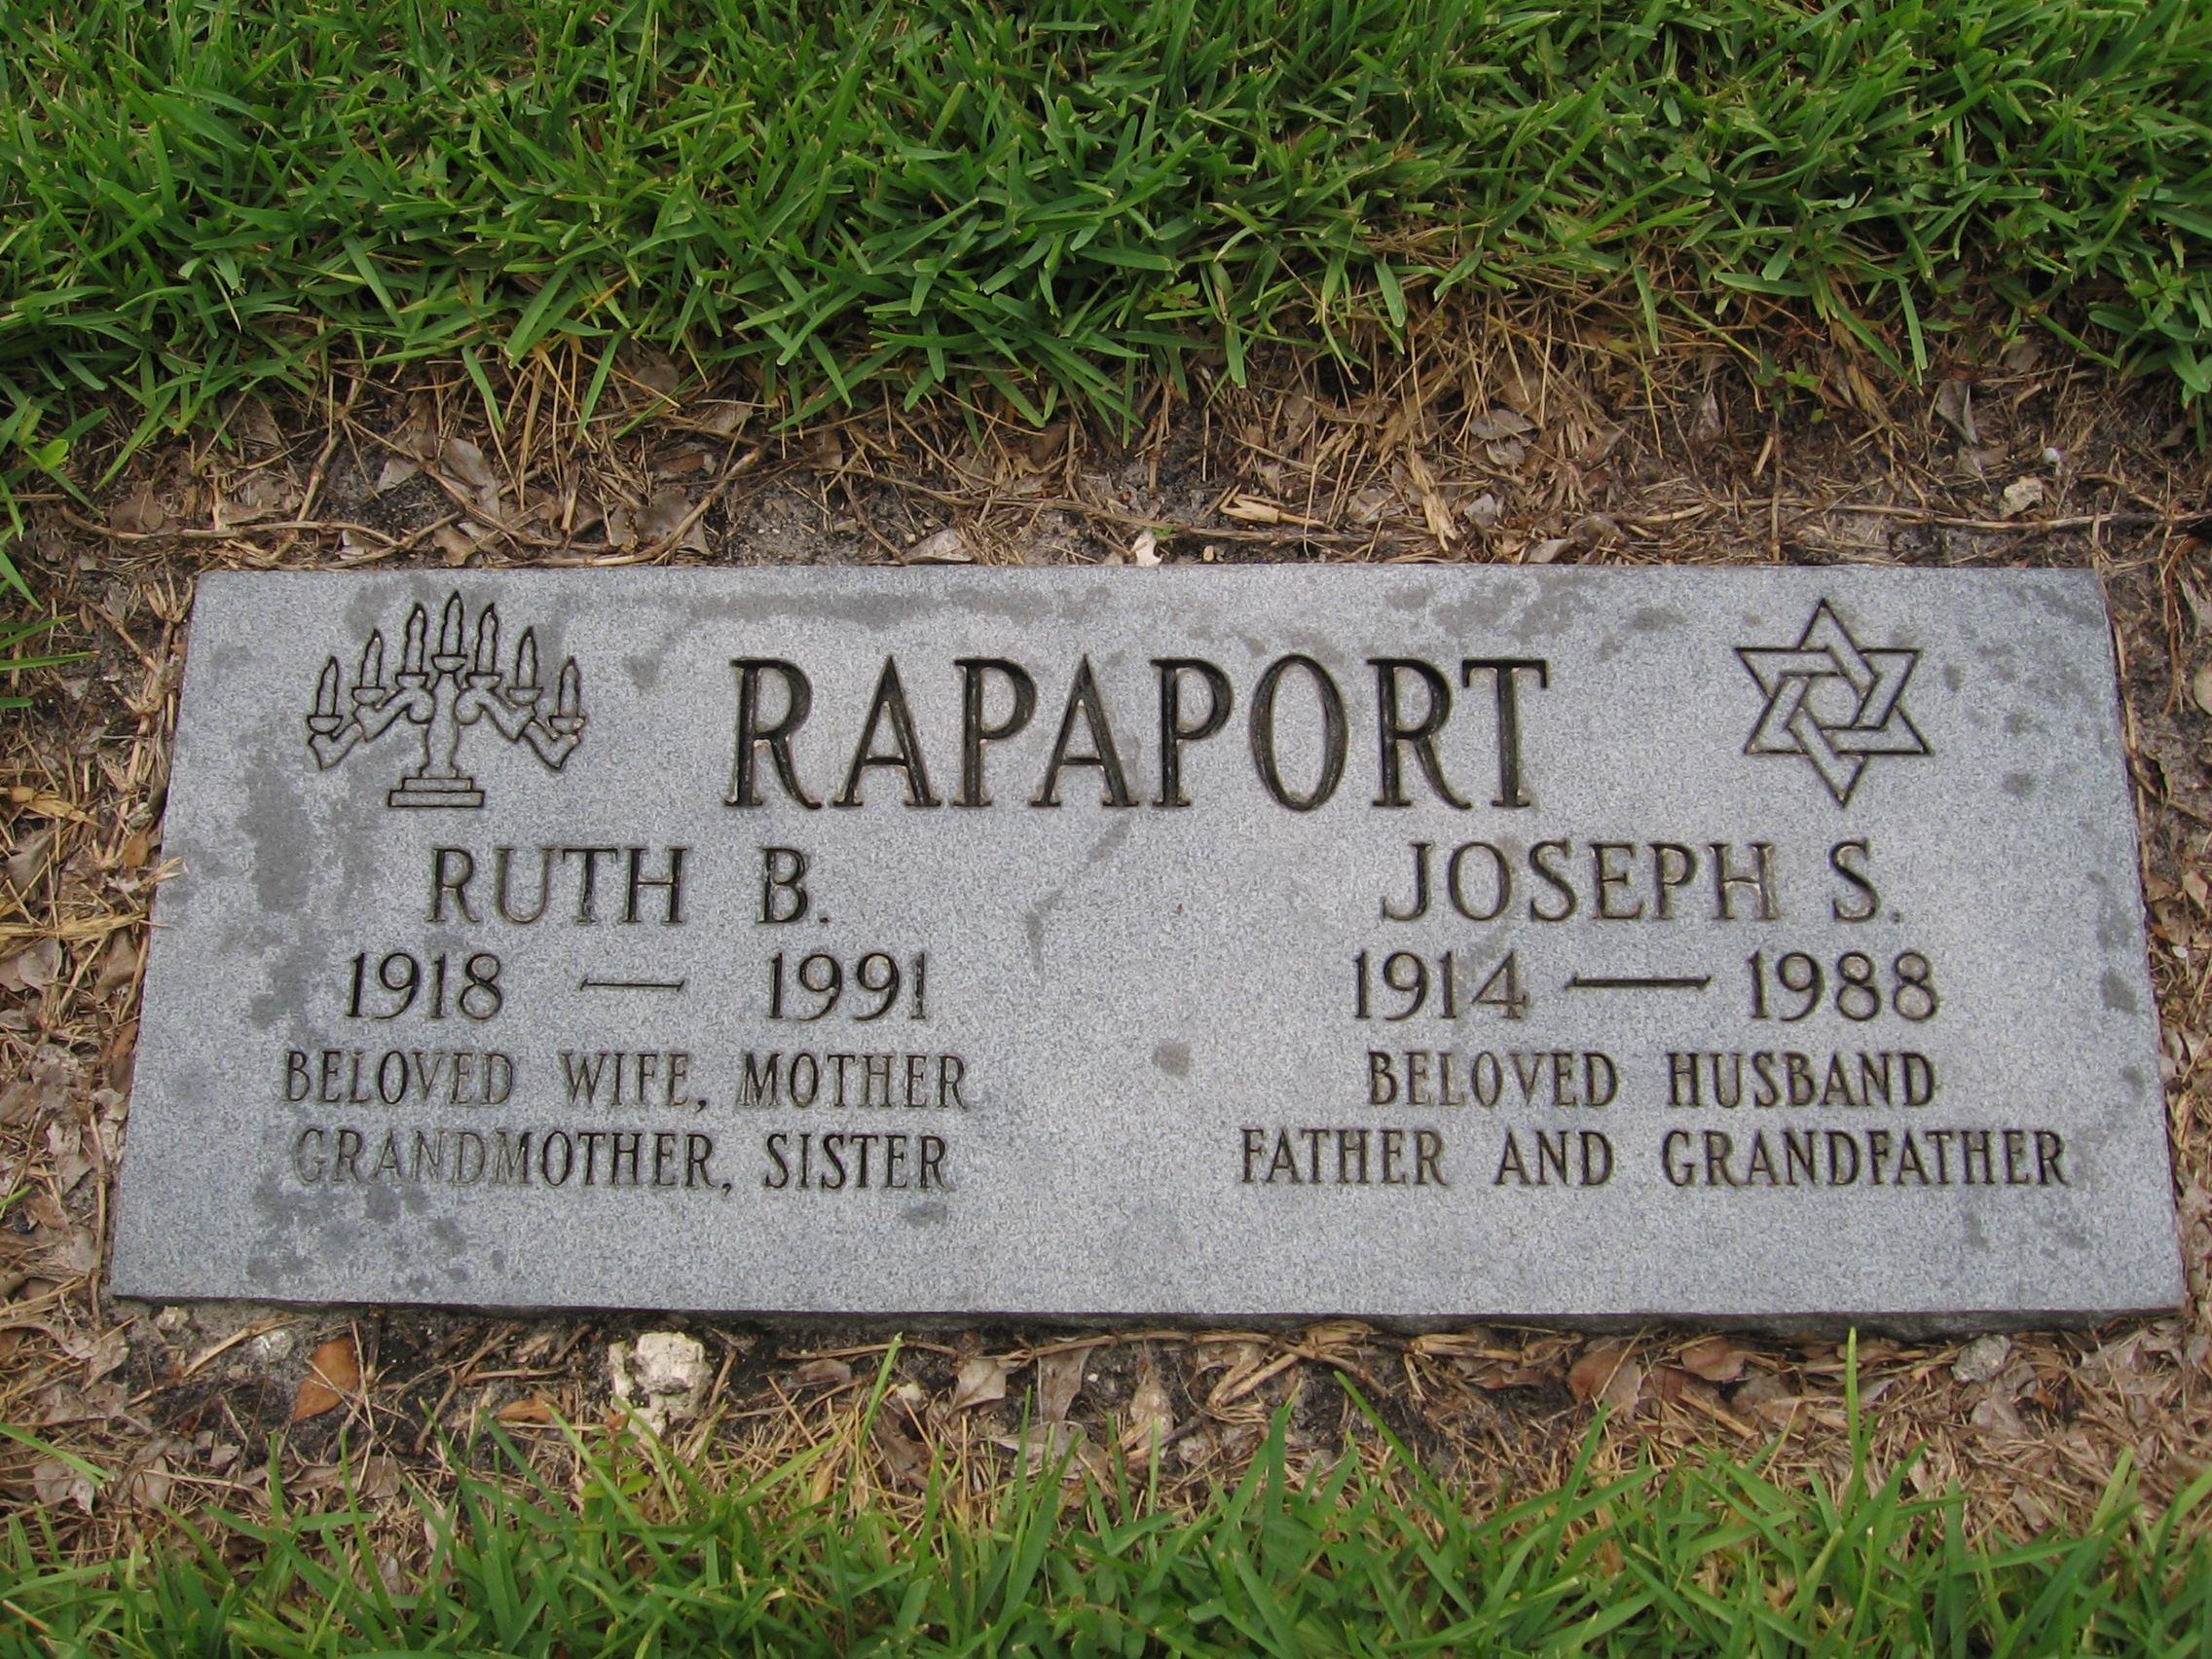 Joseph S Rapaport